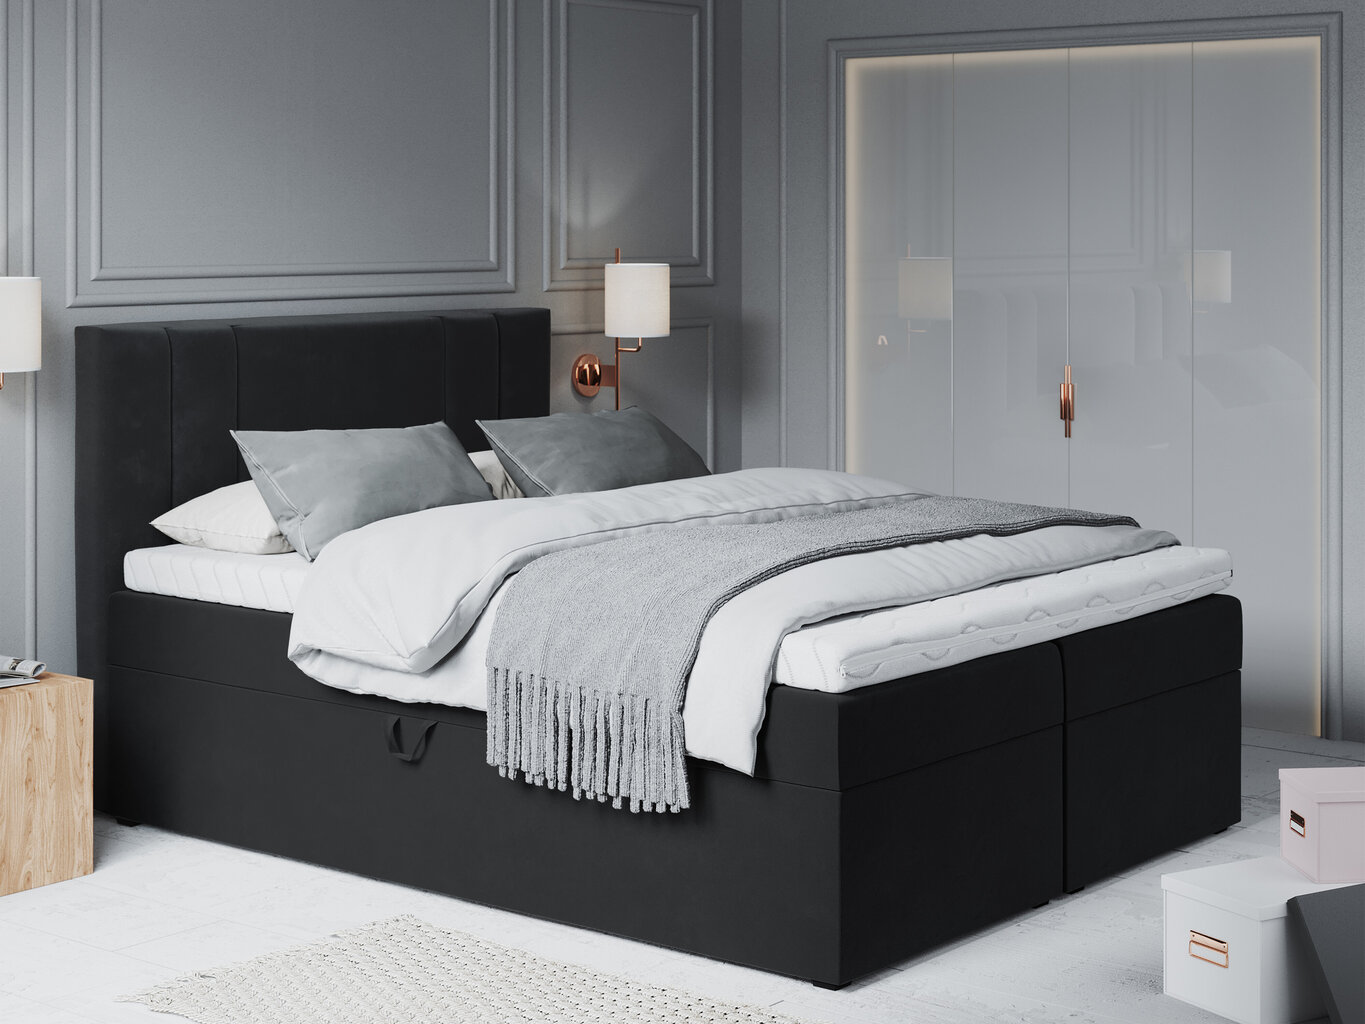 Lova Mazzini Beds Afra 200x200 cm, juoda цена и информация | Lovos | pigu.lt